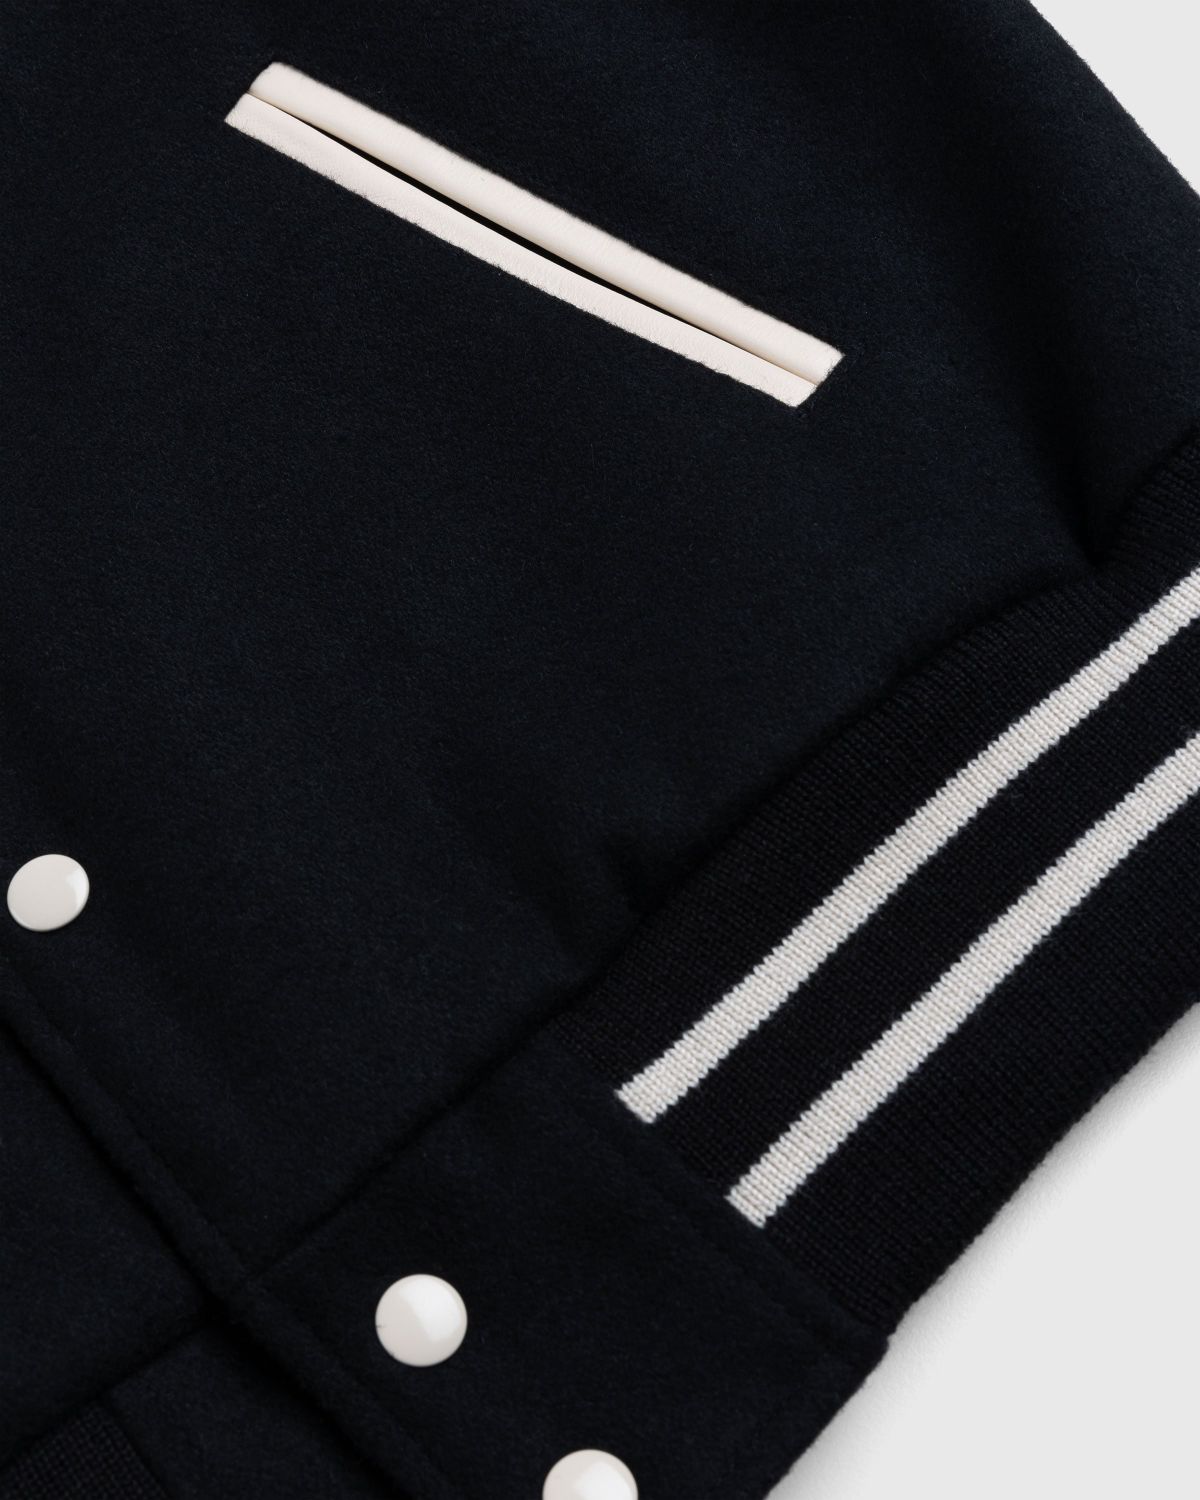 Highsnobiety – Not in Paris 5 Varsity Jacket - Outerwear - Black - Image 8